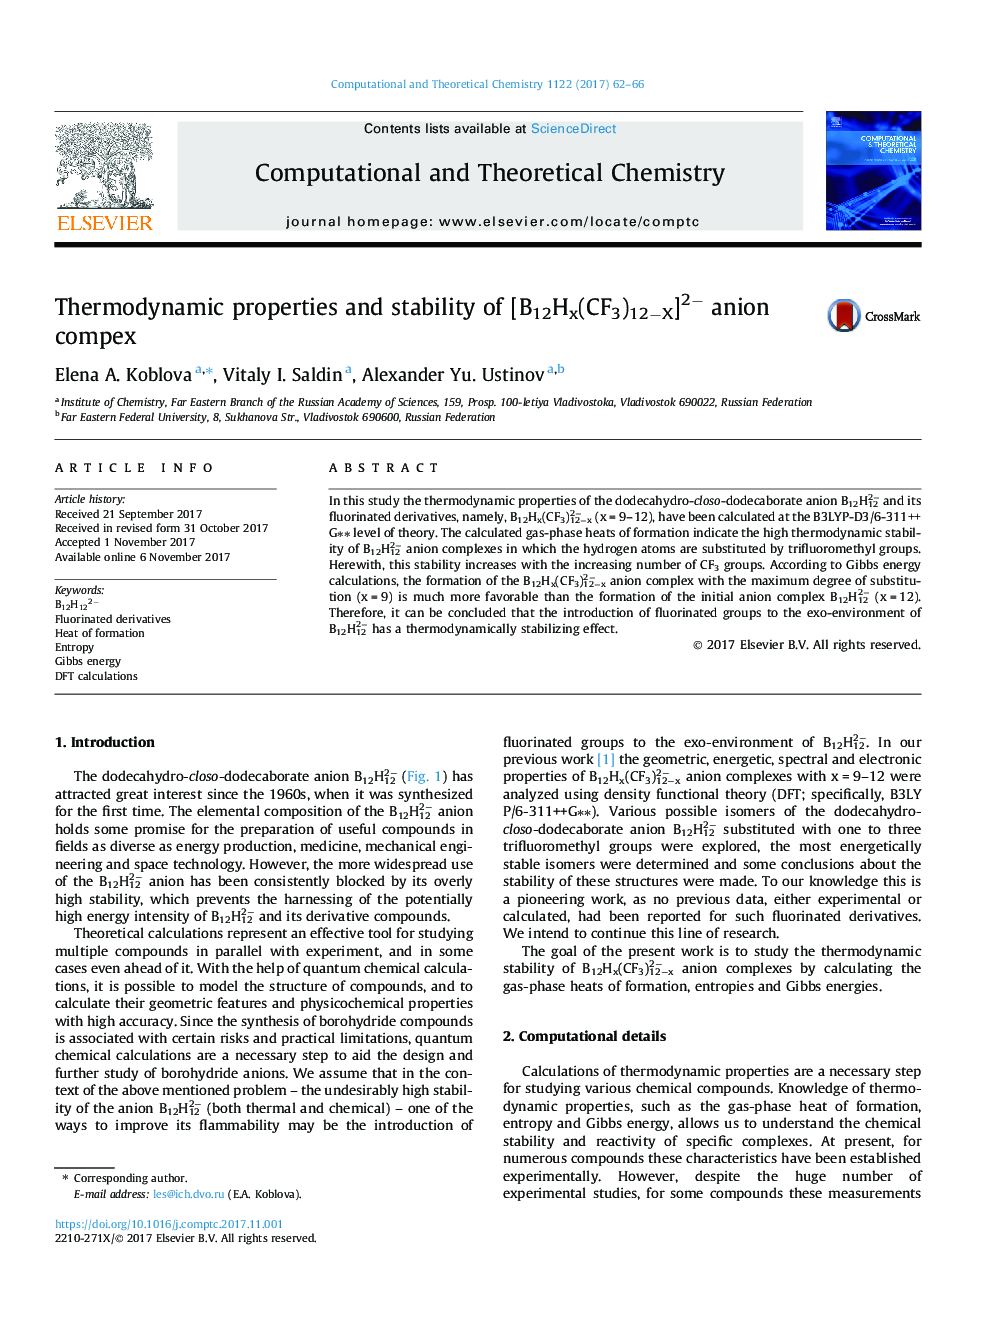 Thermodynamic properties and stability of [B12Hx(CF3)12âX]2â anion complex